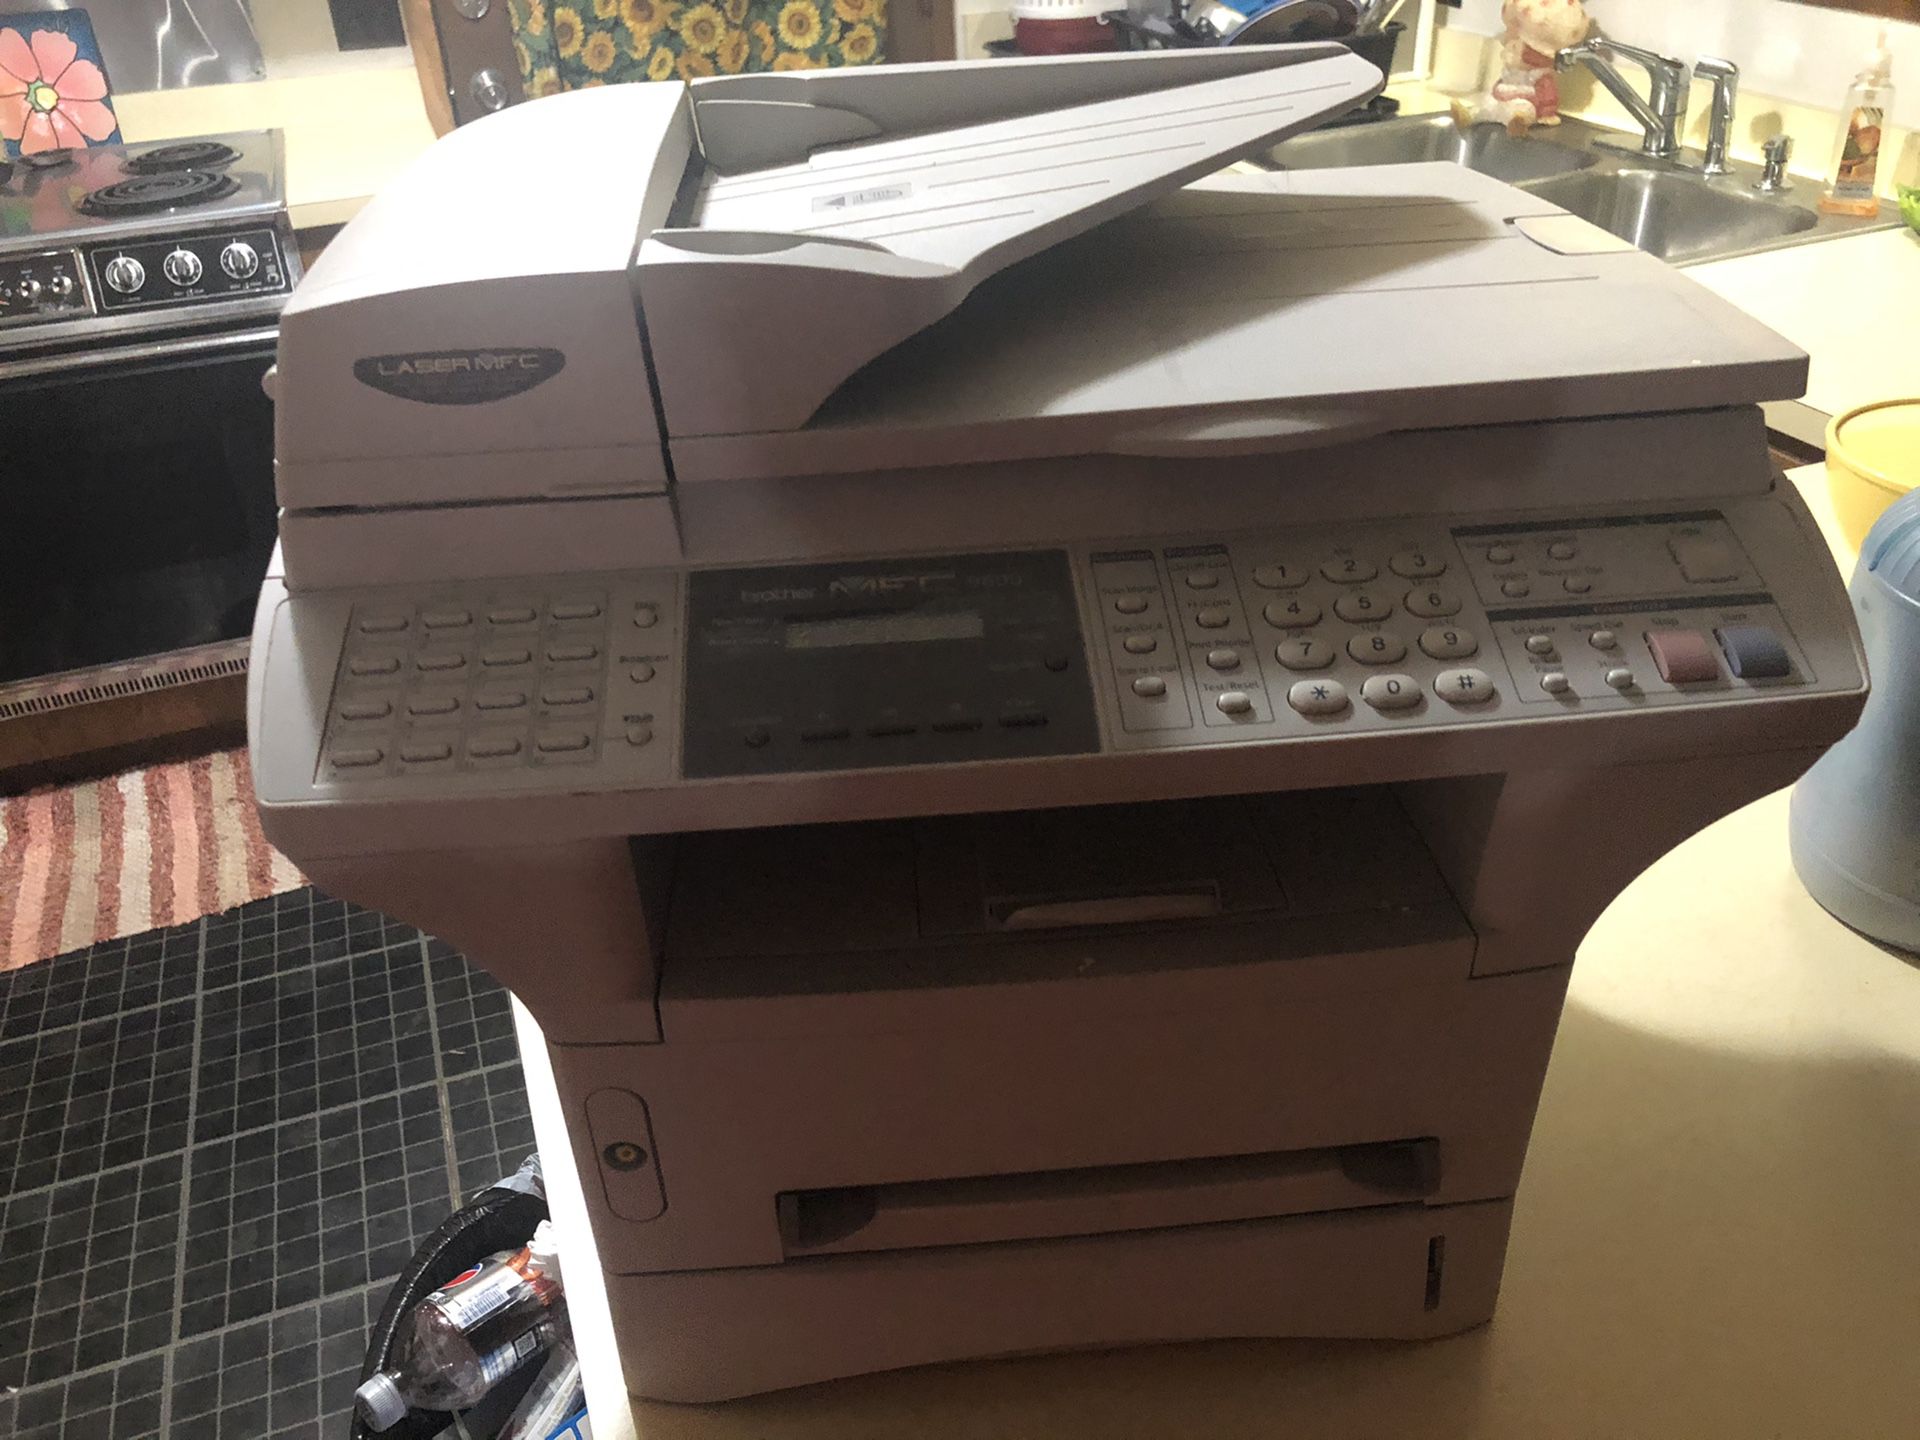 Brother Printer copy/ scan/ print/ fax